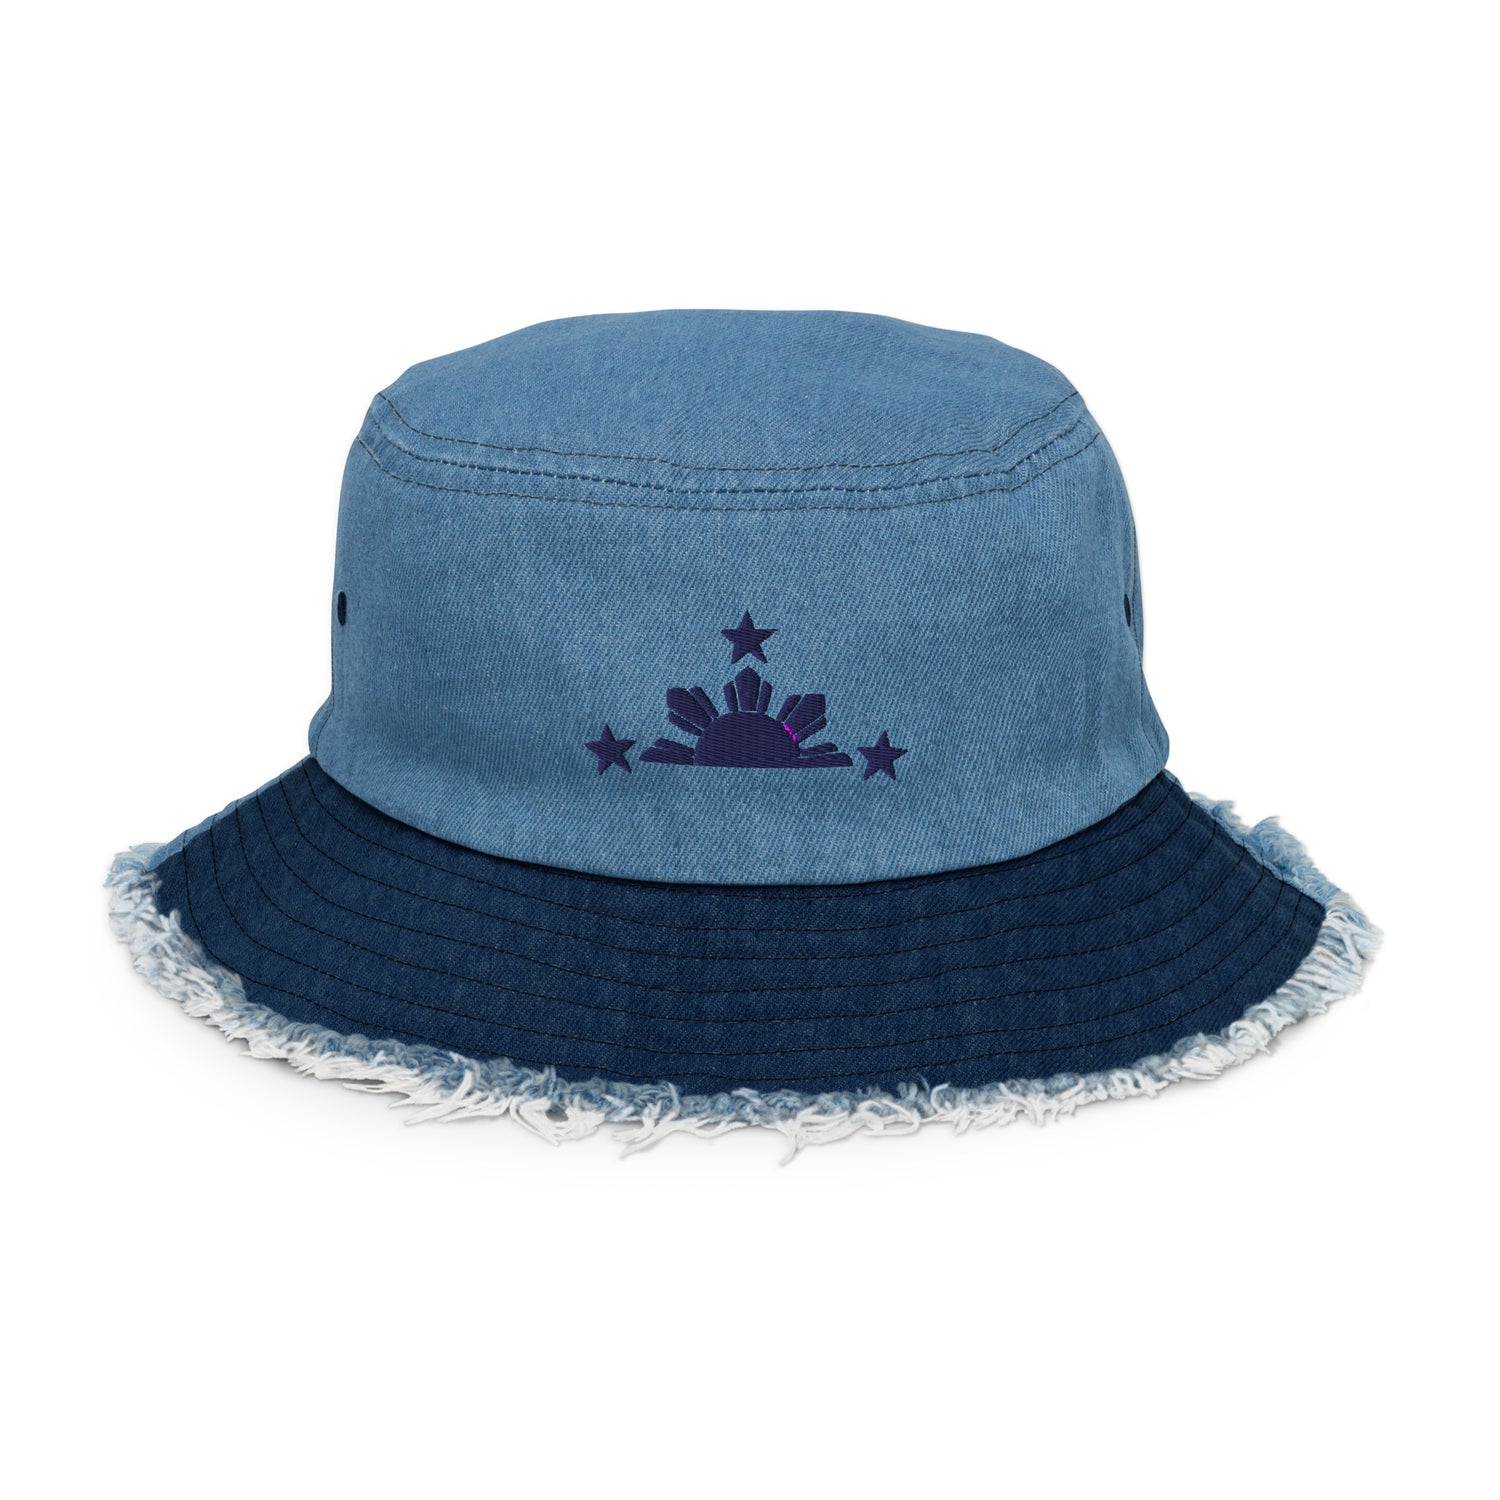 Stars & Sun Pinoy Embroidered Distressed Denim Bucket Hat in variant Classic Light Denim.